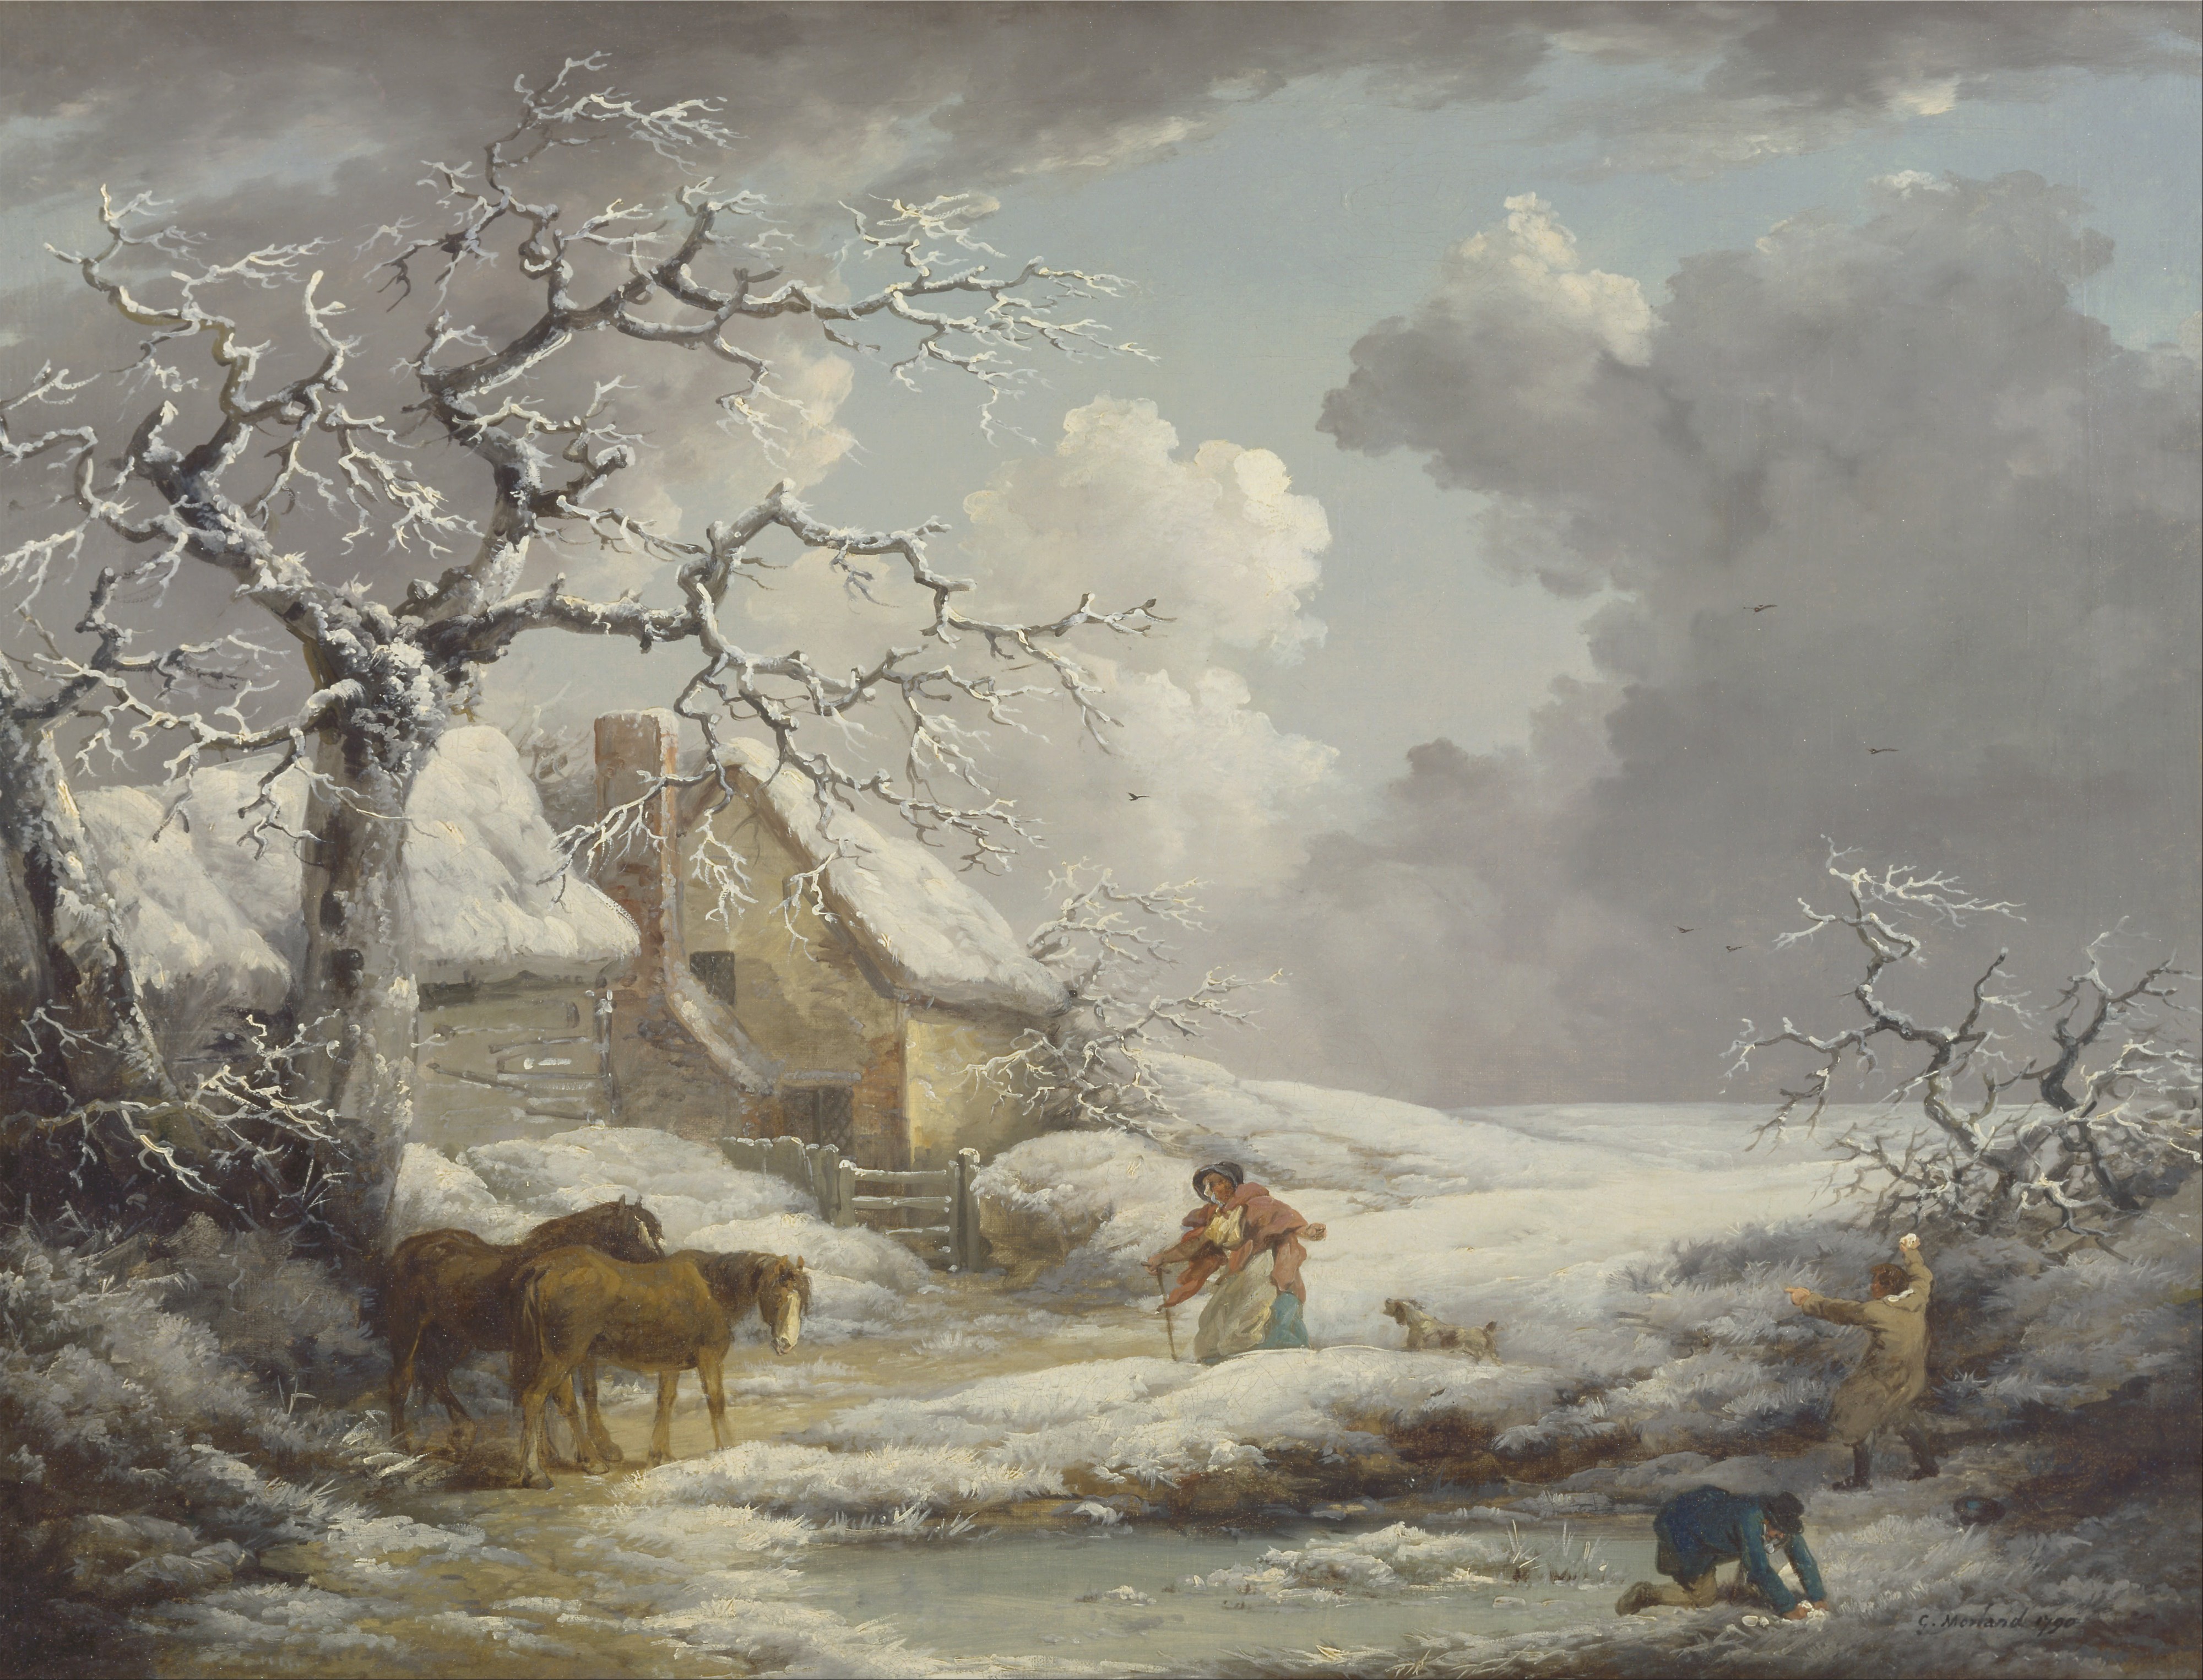 George Morland - Winter Landscape - Google Art Project